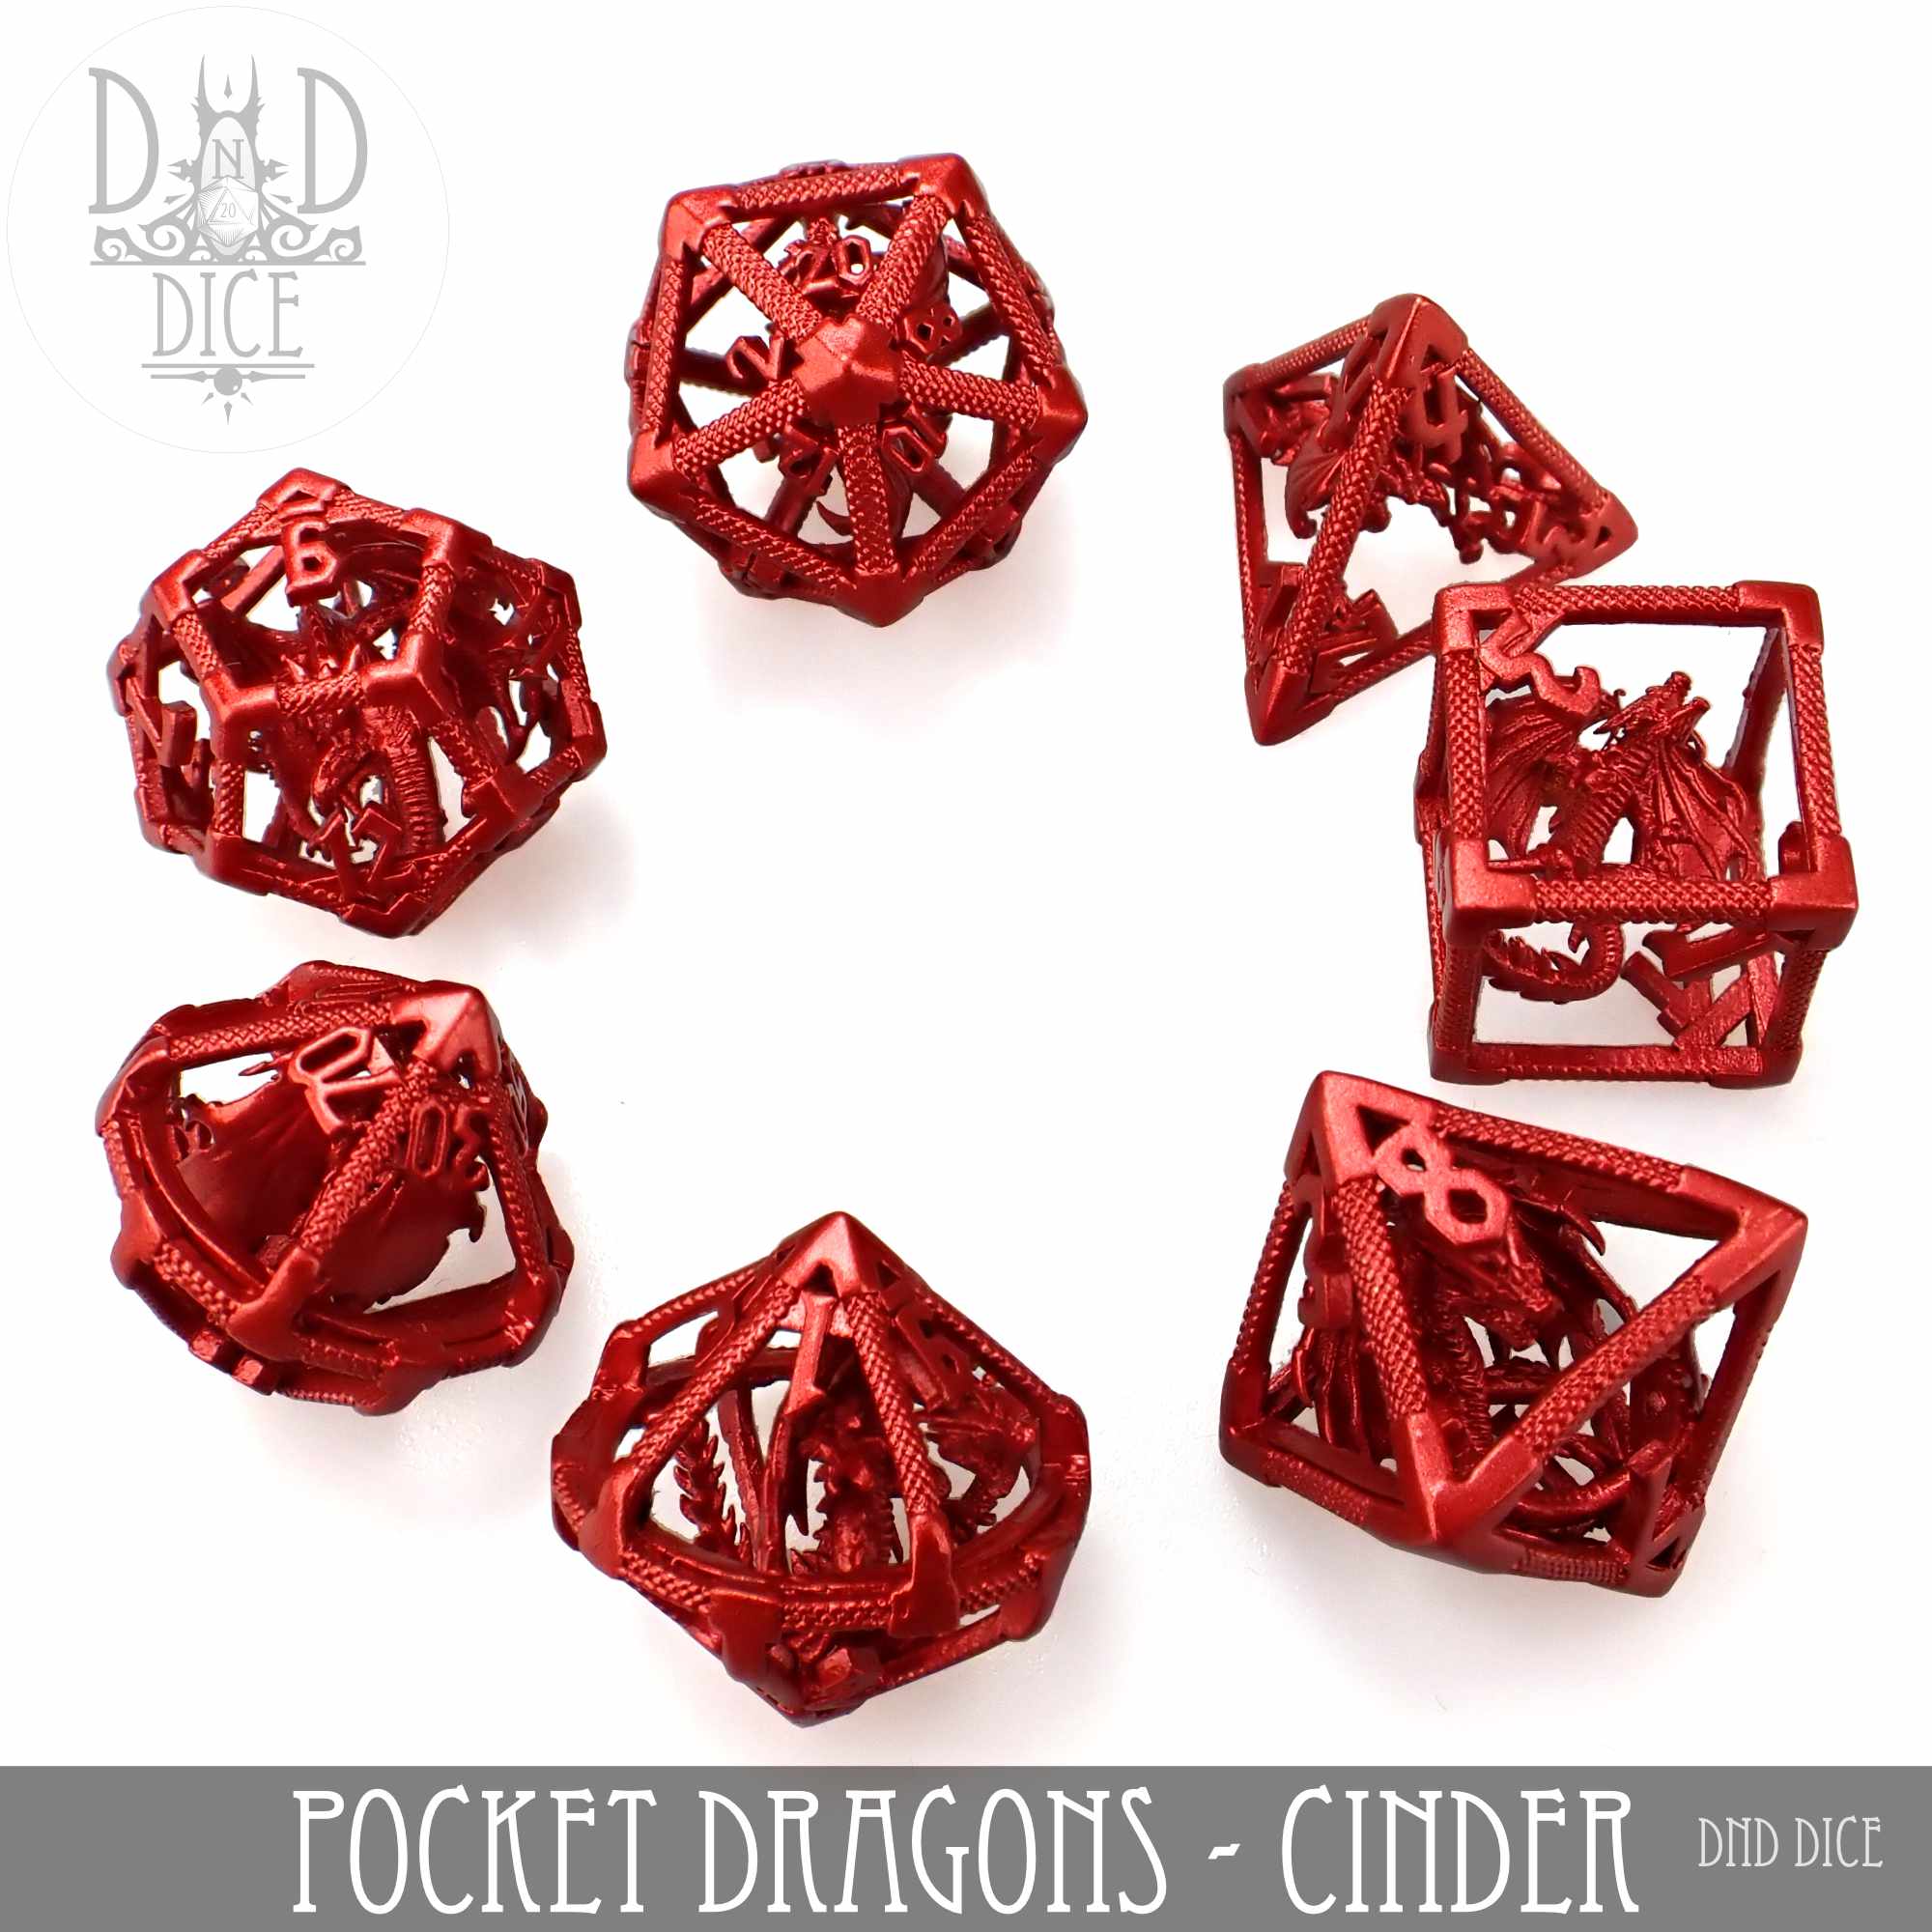 Pocket Dragons - Cinder Metal Dice Set (Gift Box)